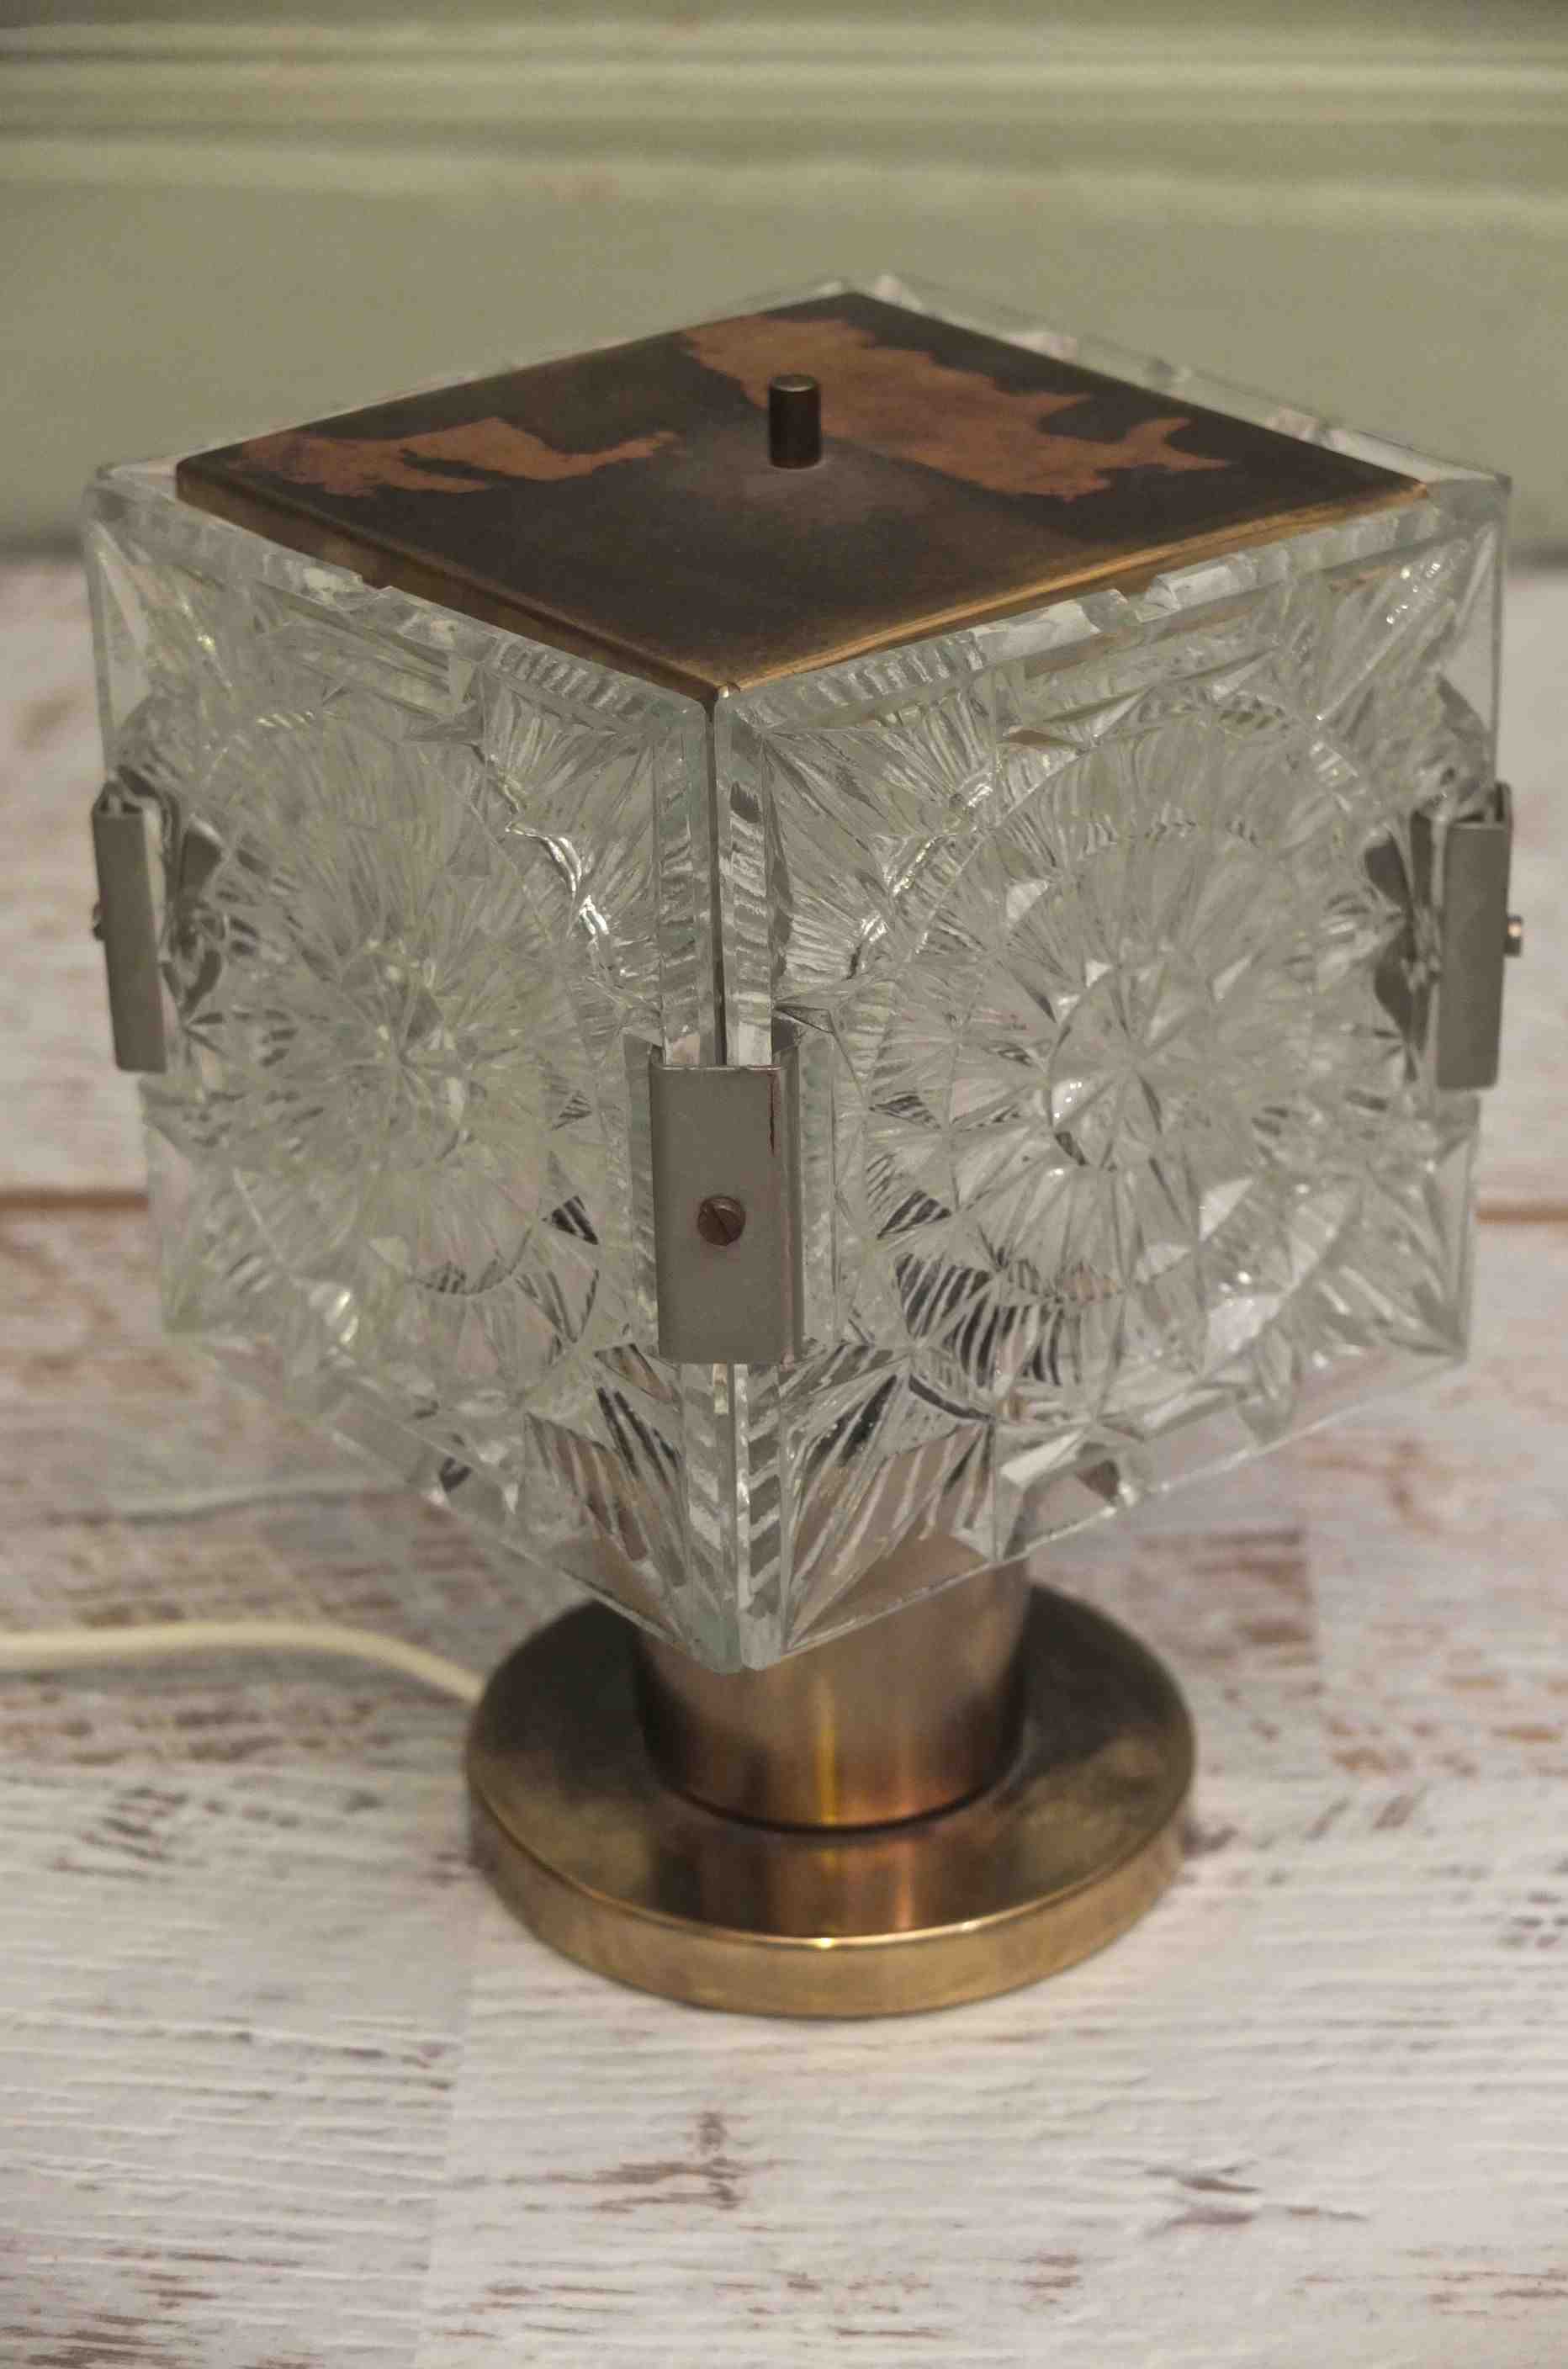 Slavia Vintage lampe des années 80 en verre modèle "Glasnost" photo générale